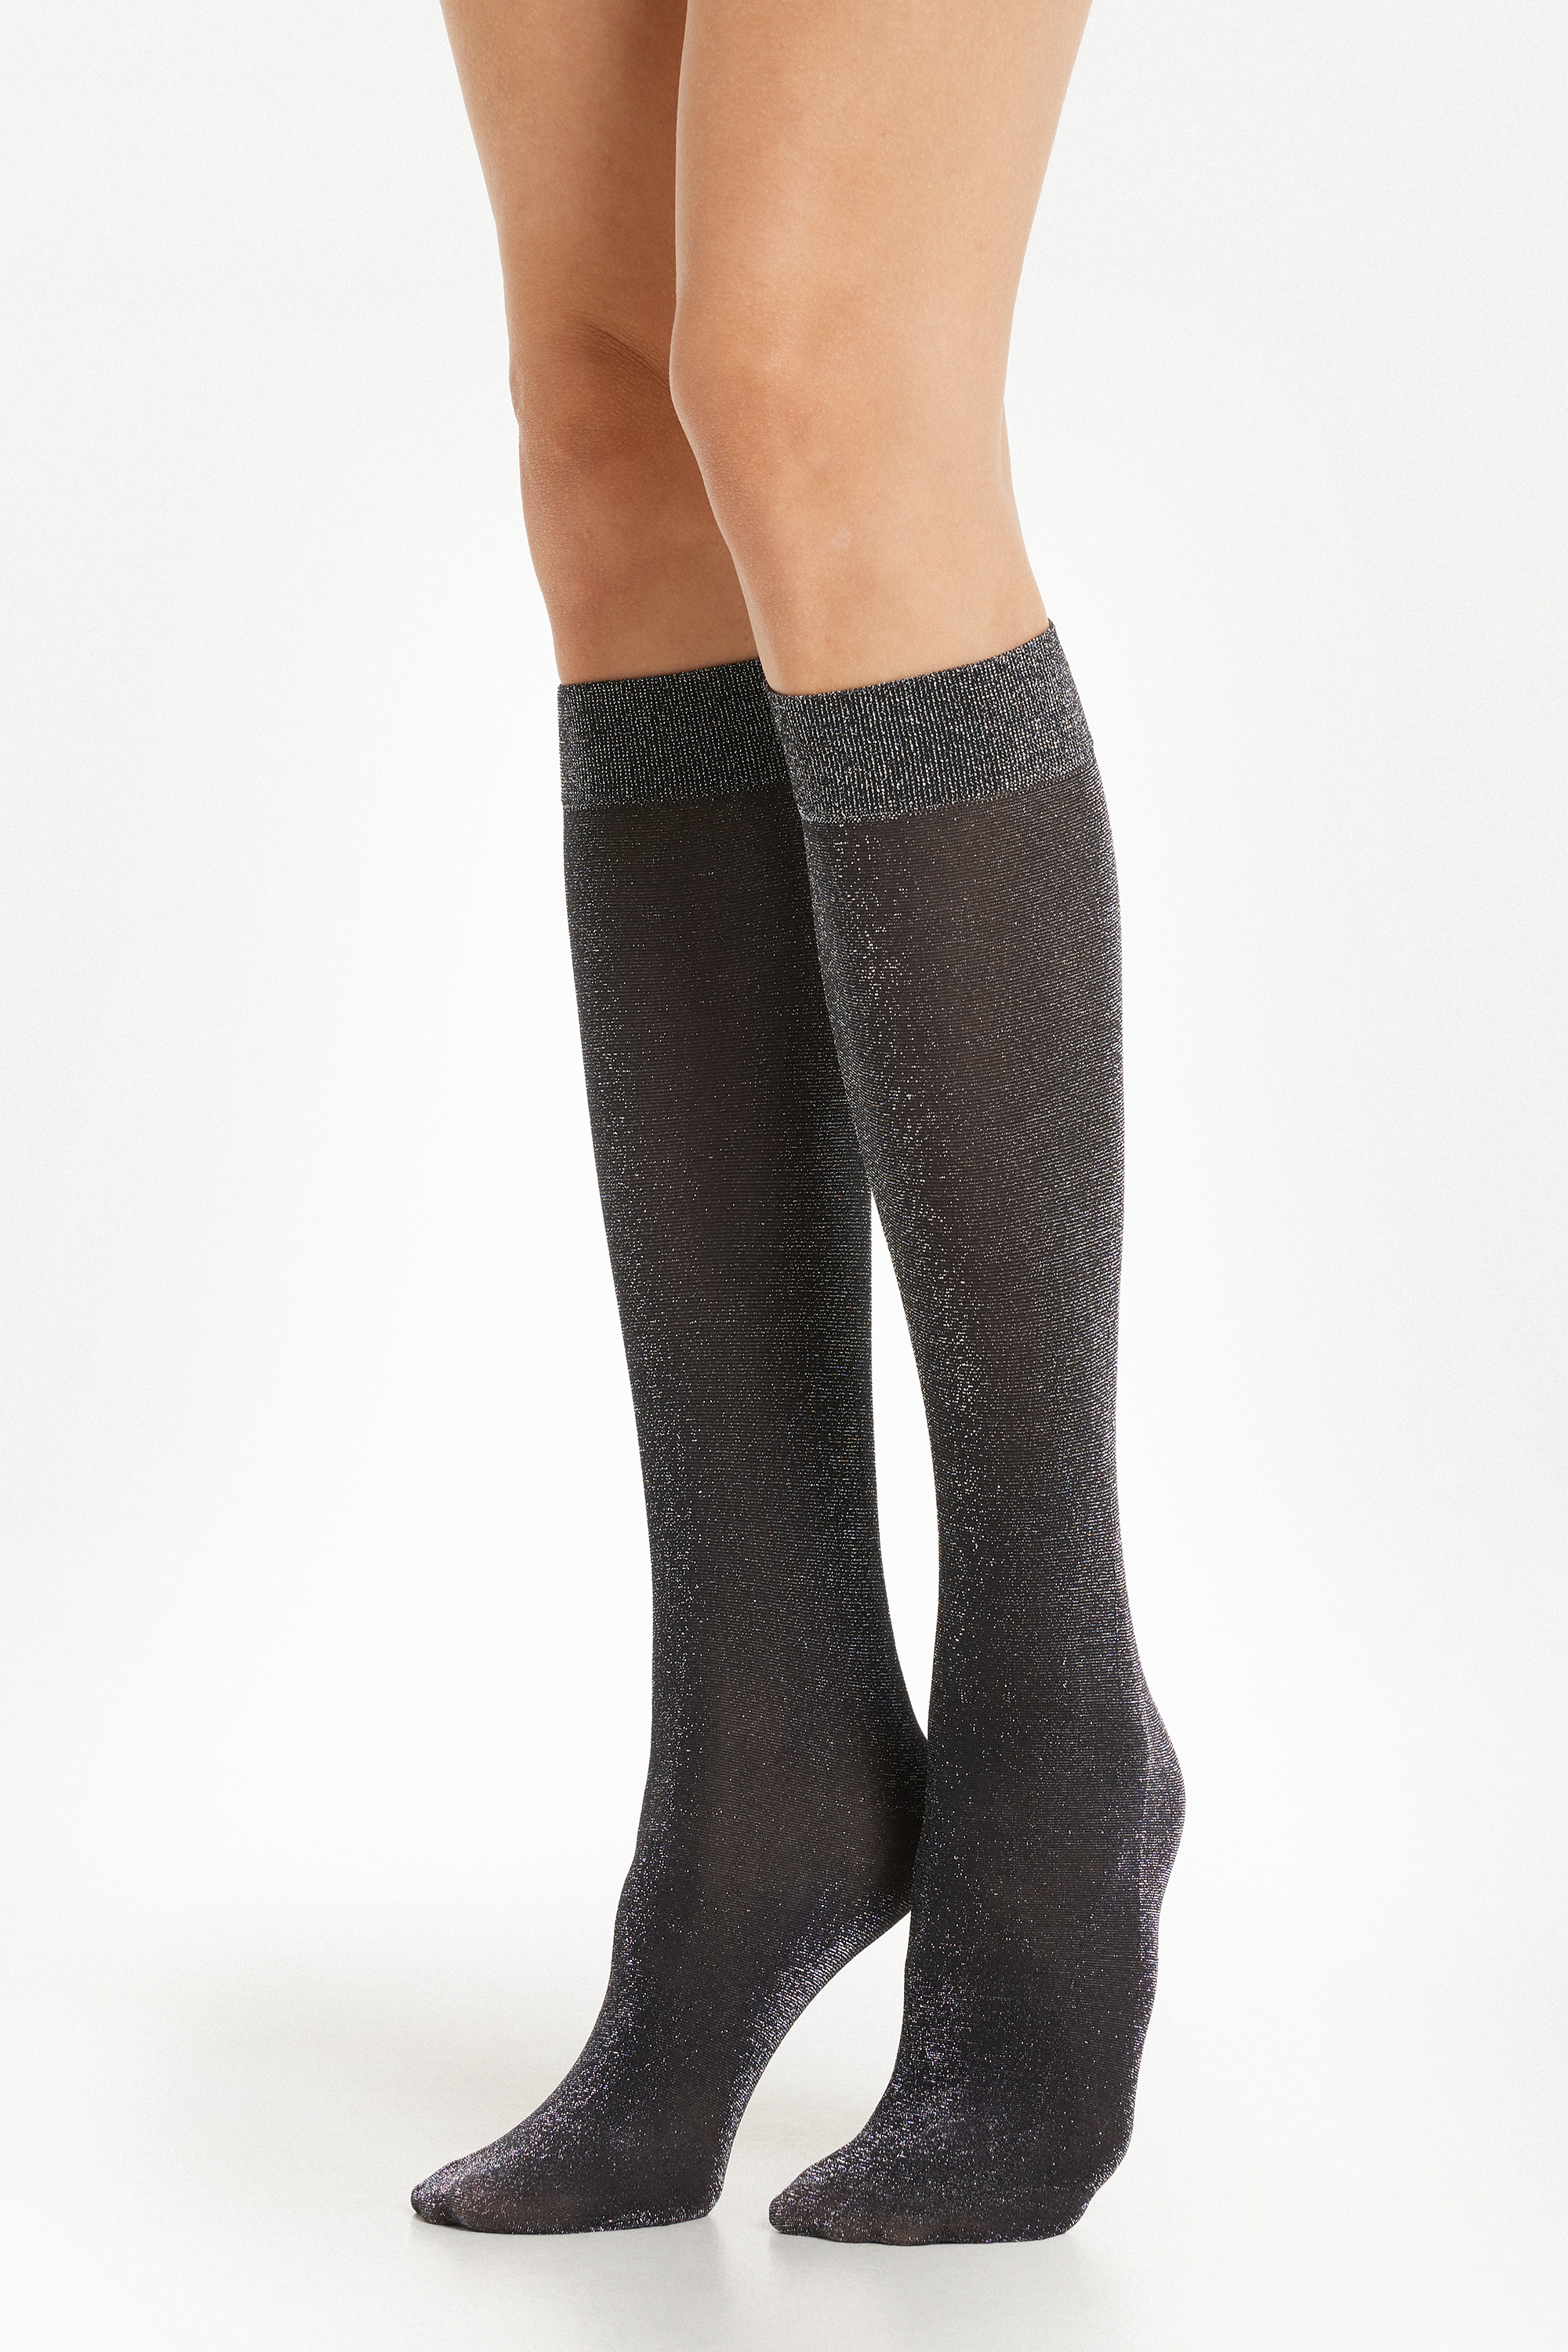 Laminated Sheer Knee-High Stockings